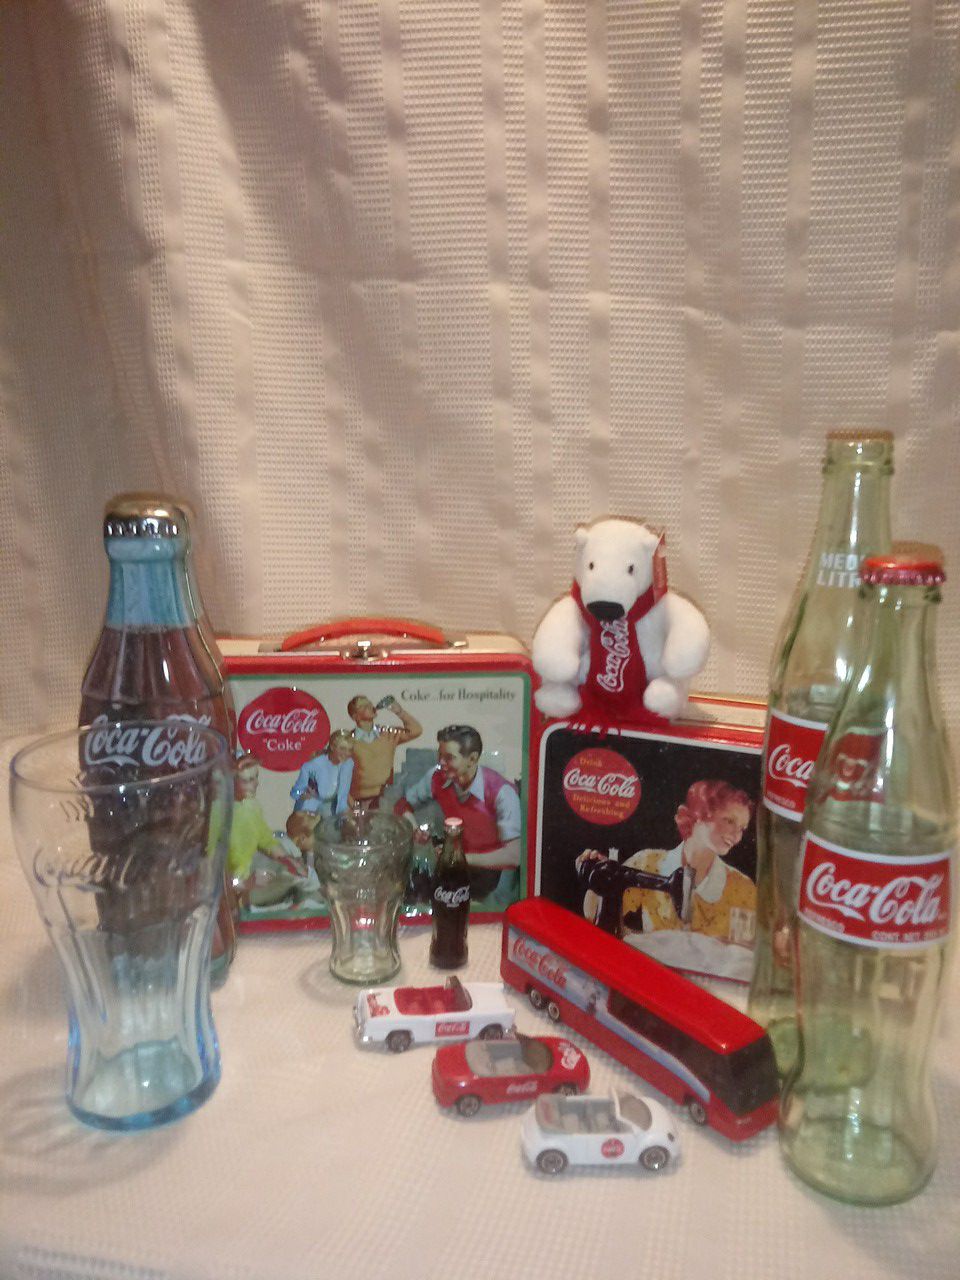 Coca-Cola collection